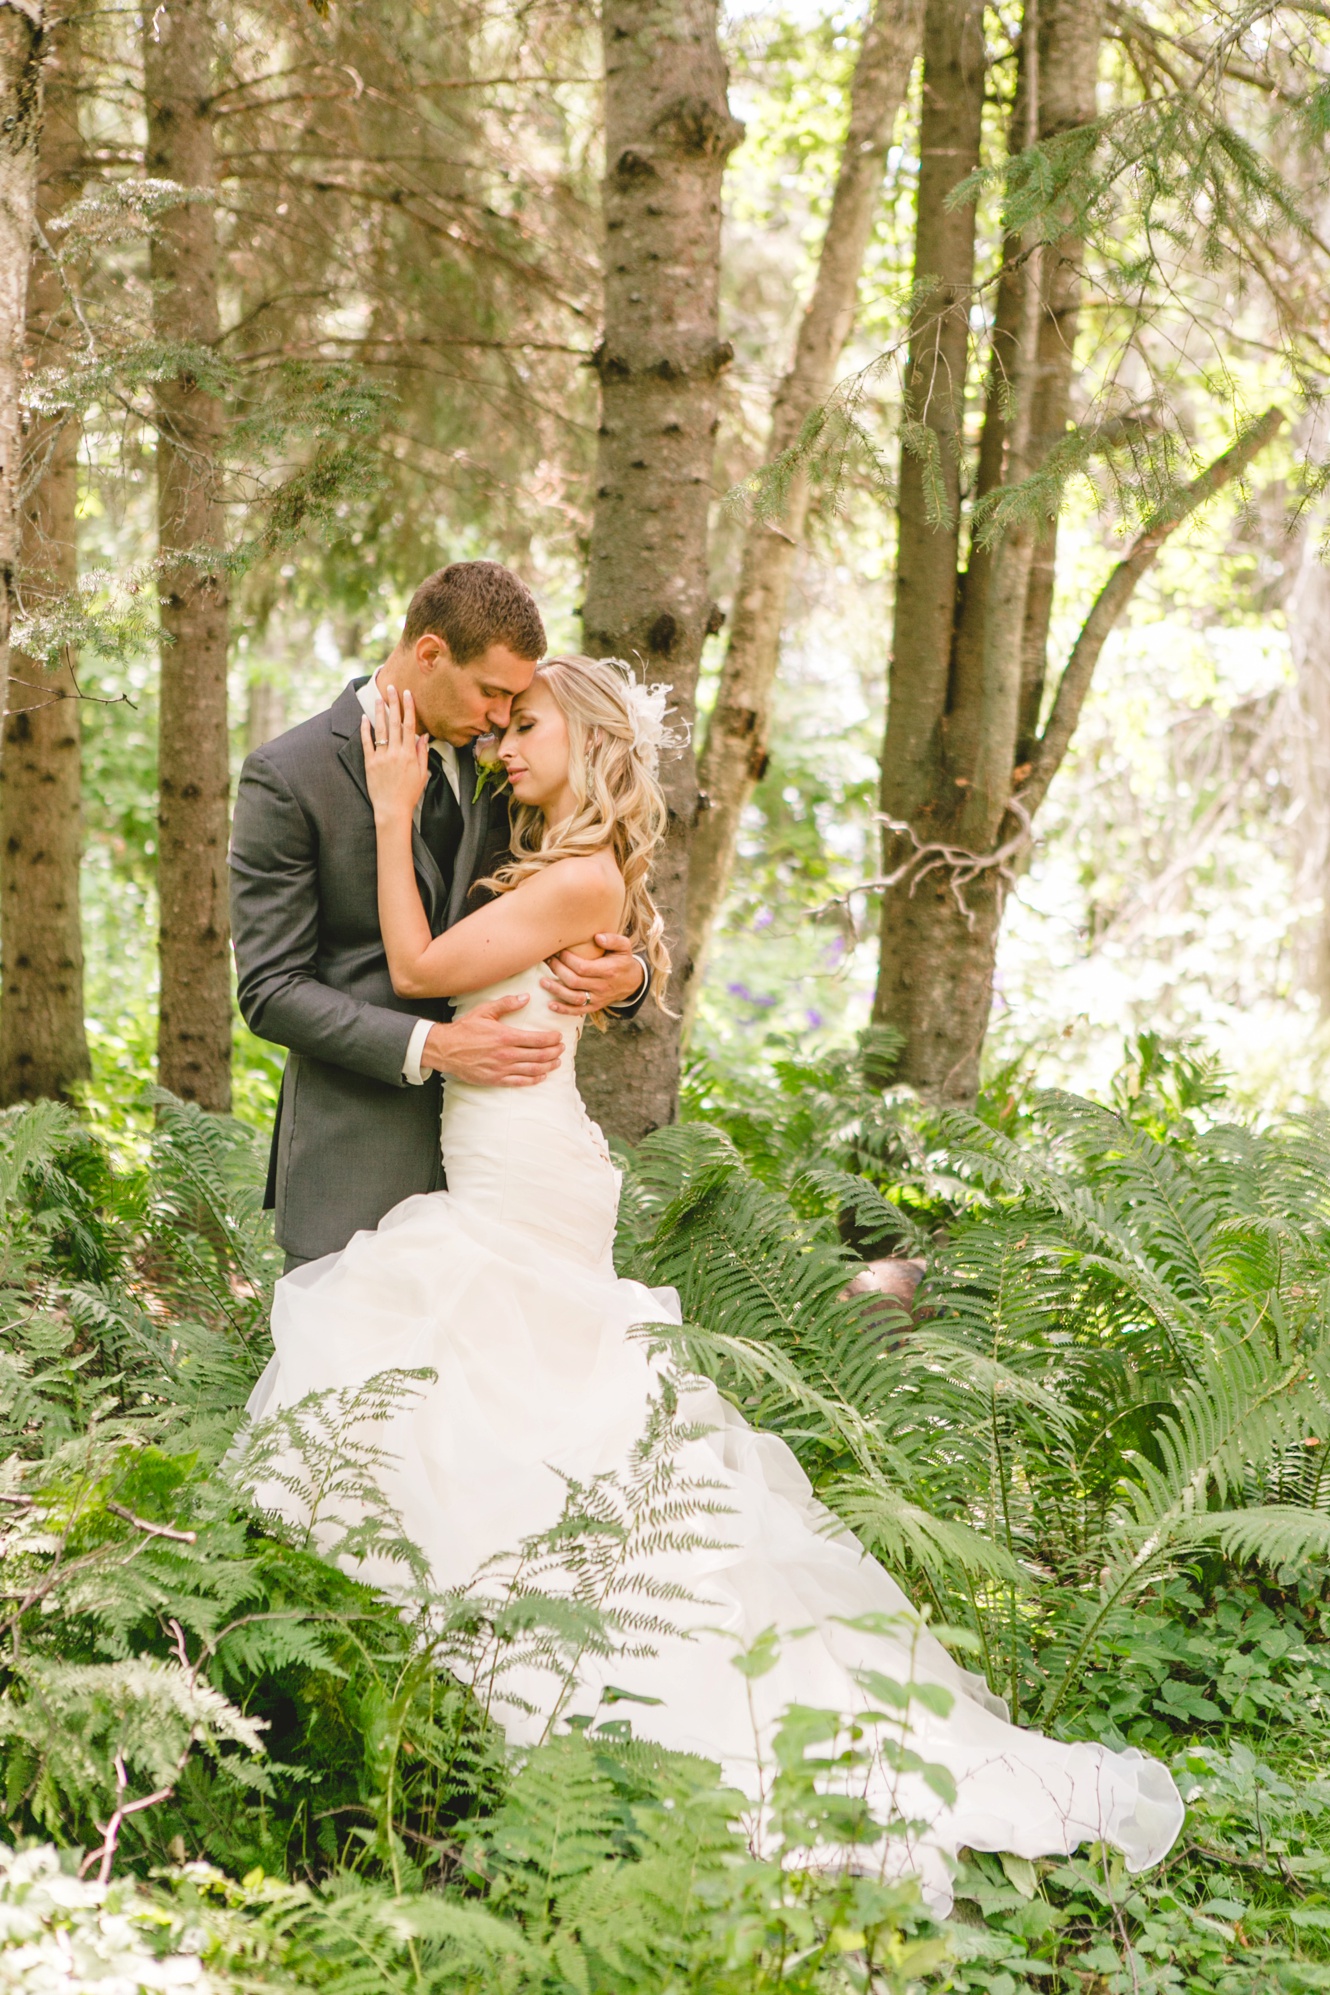 Romantic forest wedding inspiration photo